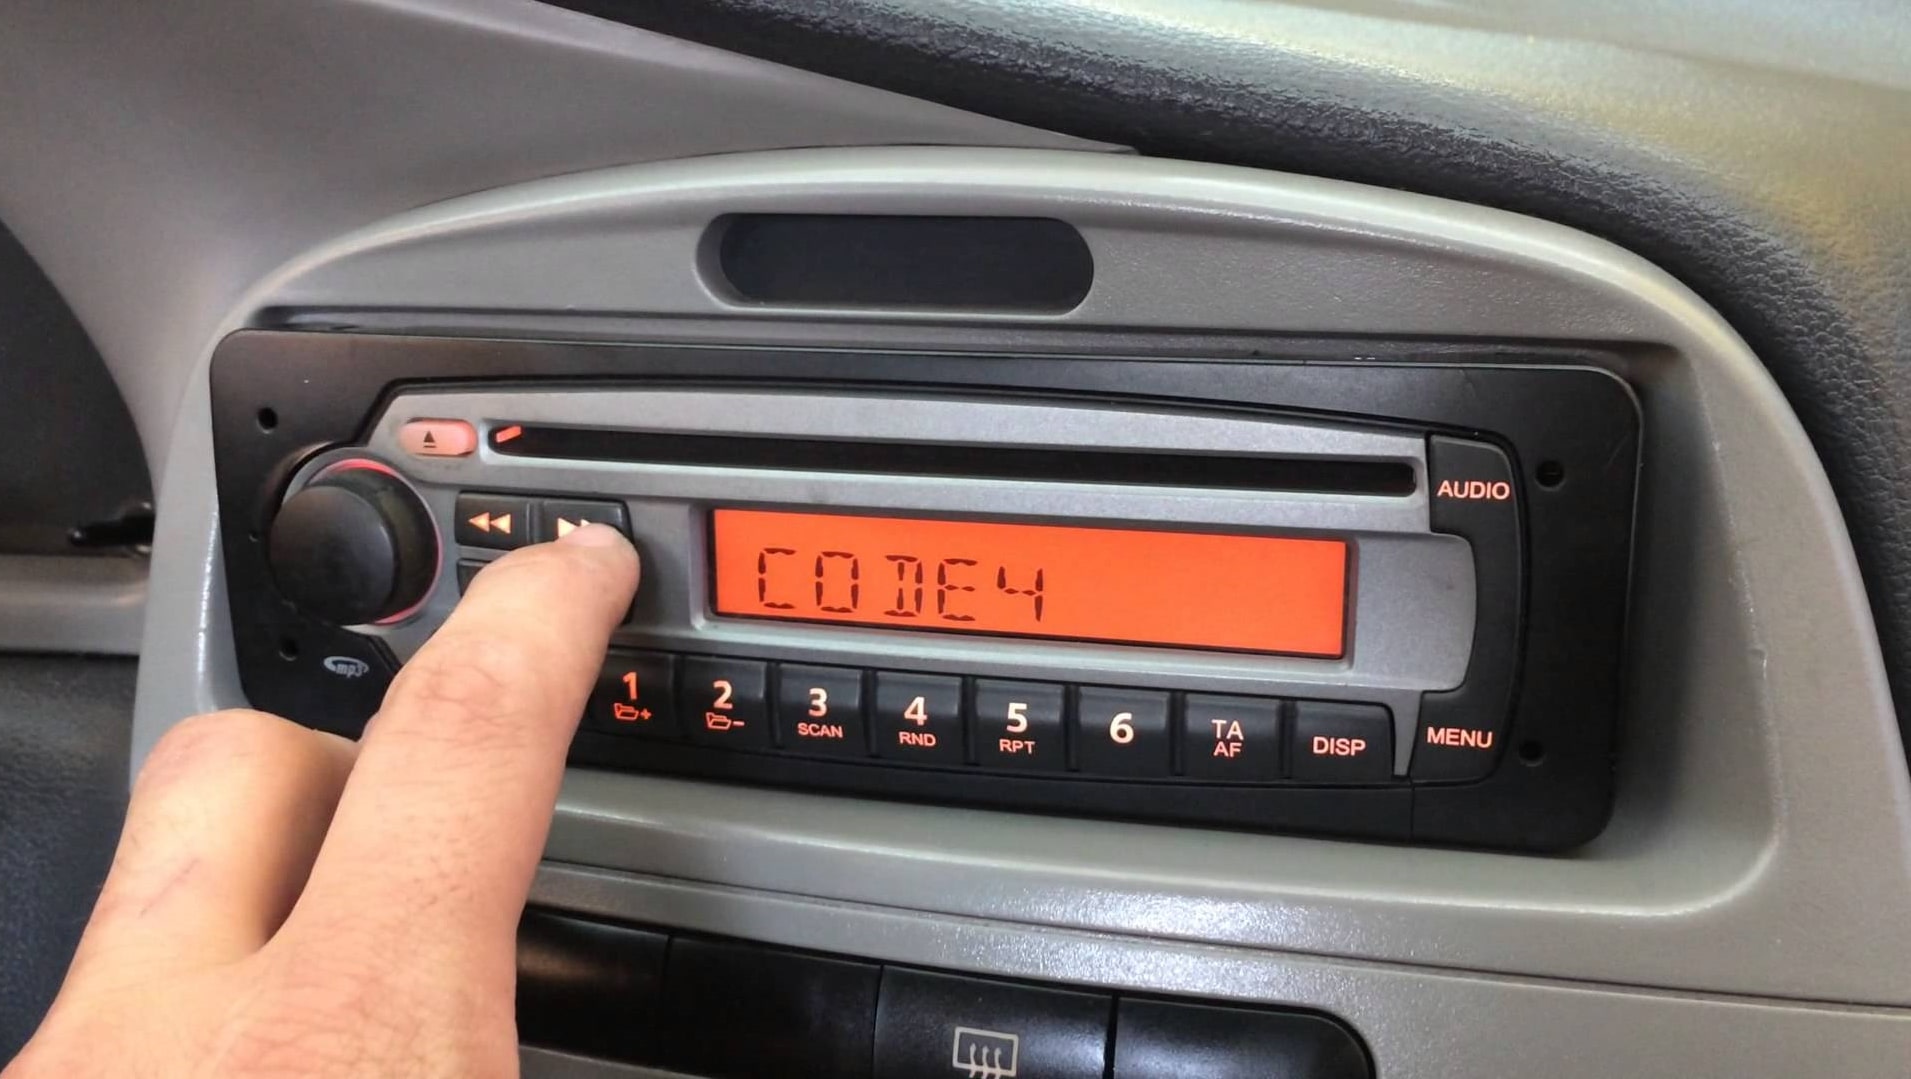 Fiat Uno Radio Code